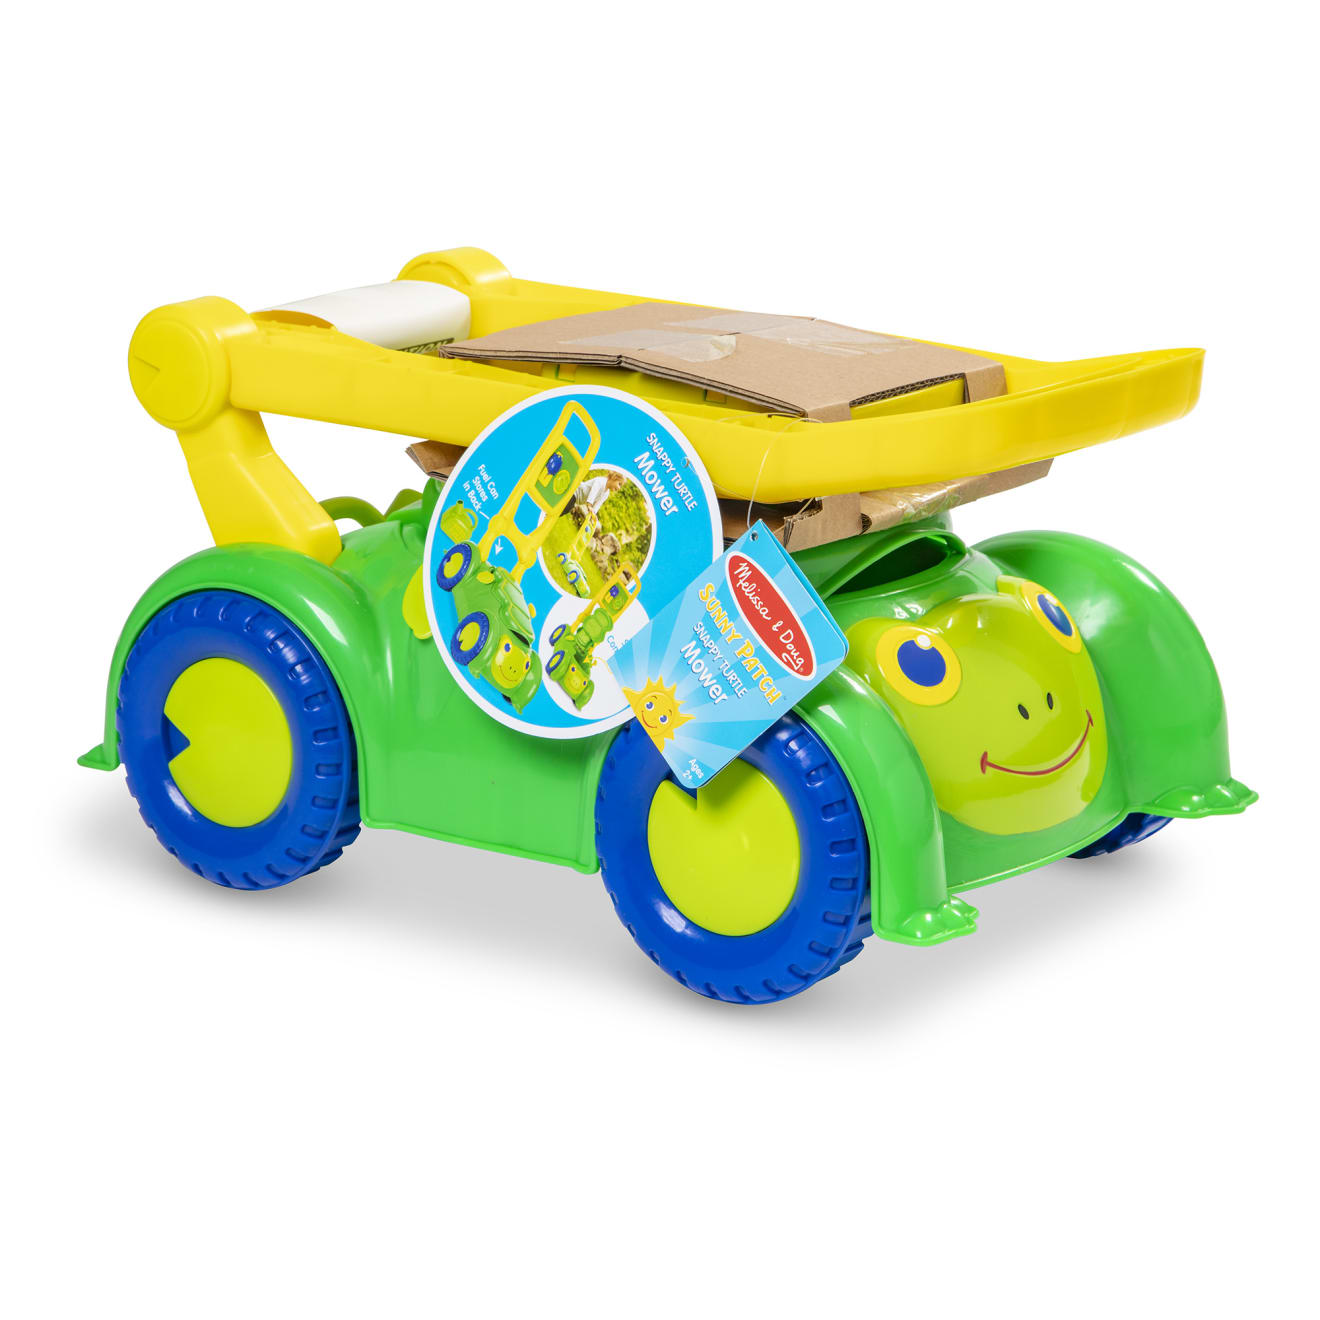 Plastic Lawn Mower Toy | Turtle Lawn Mower